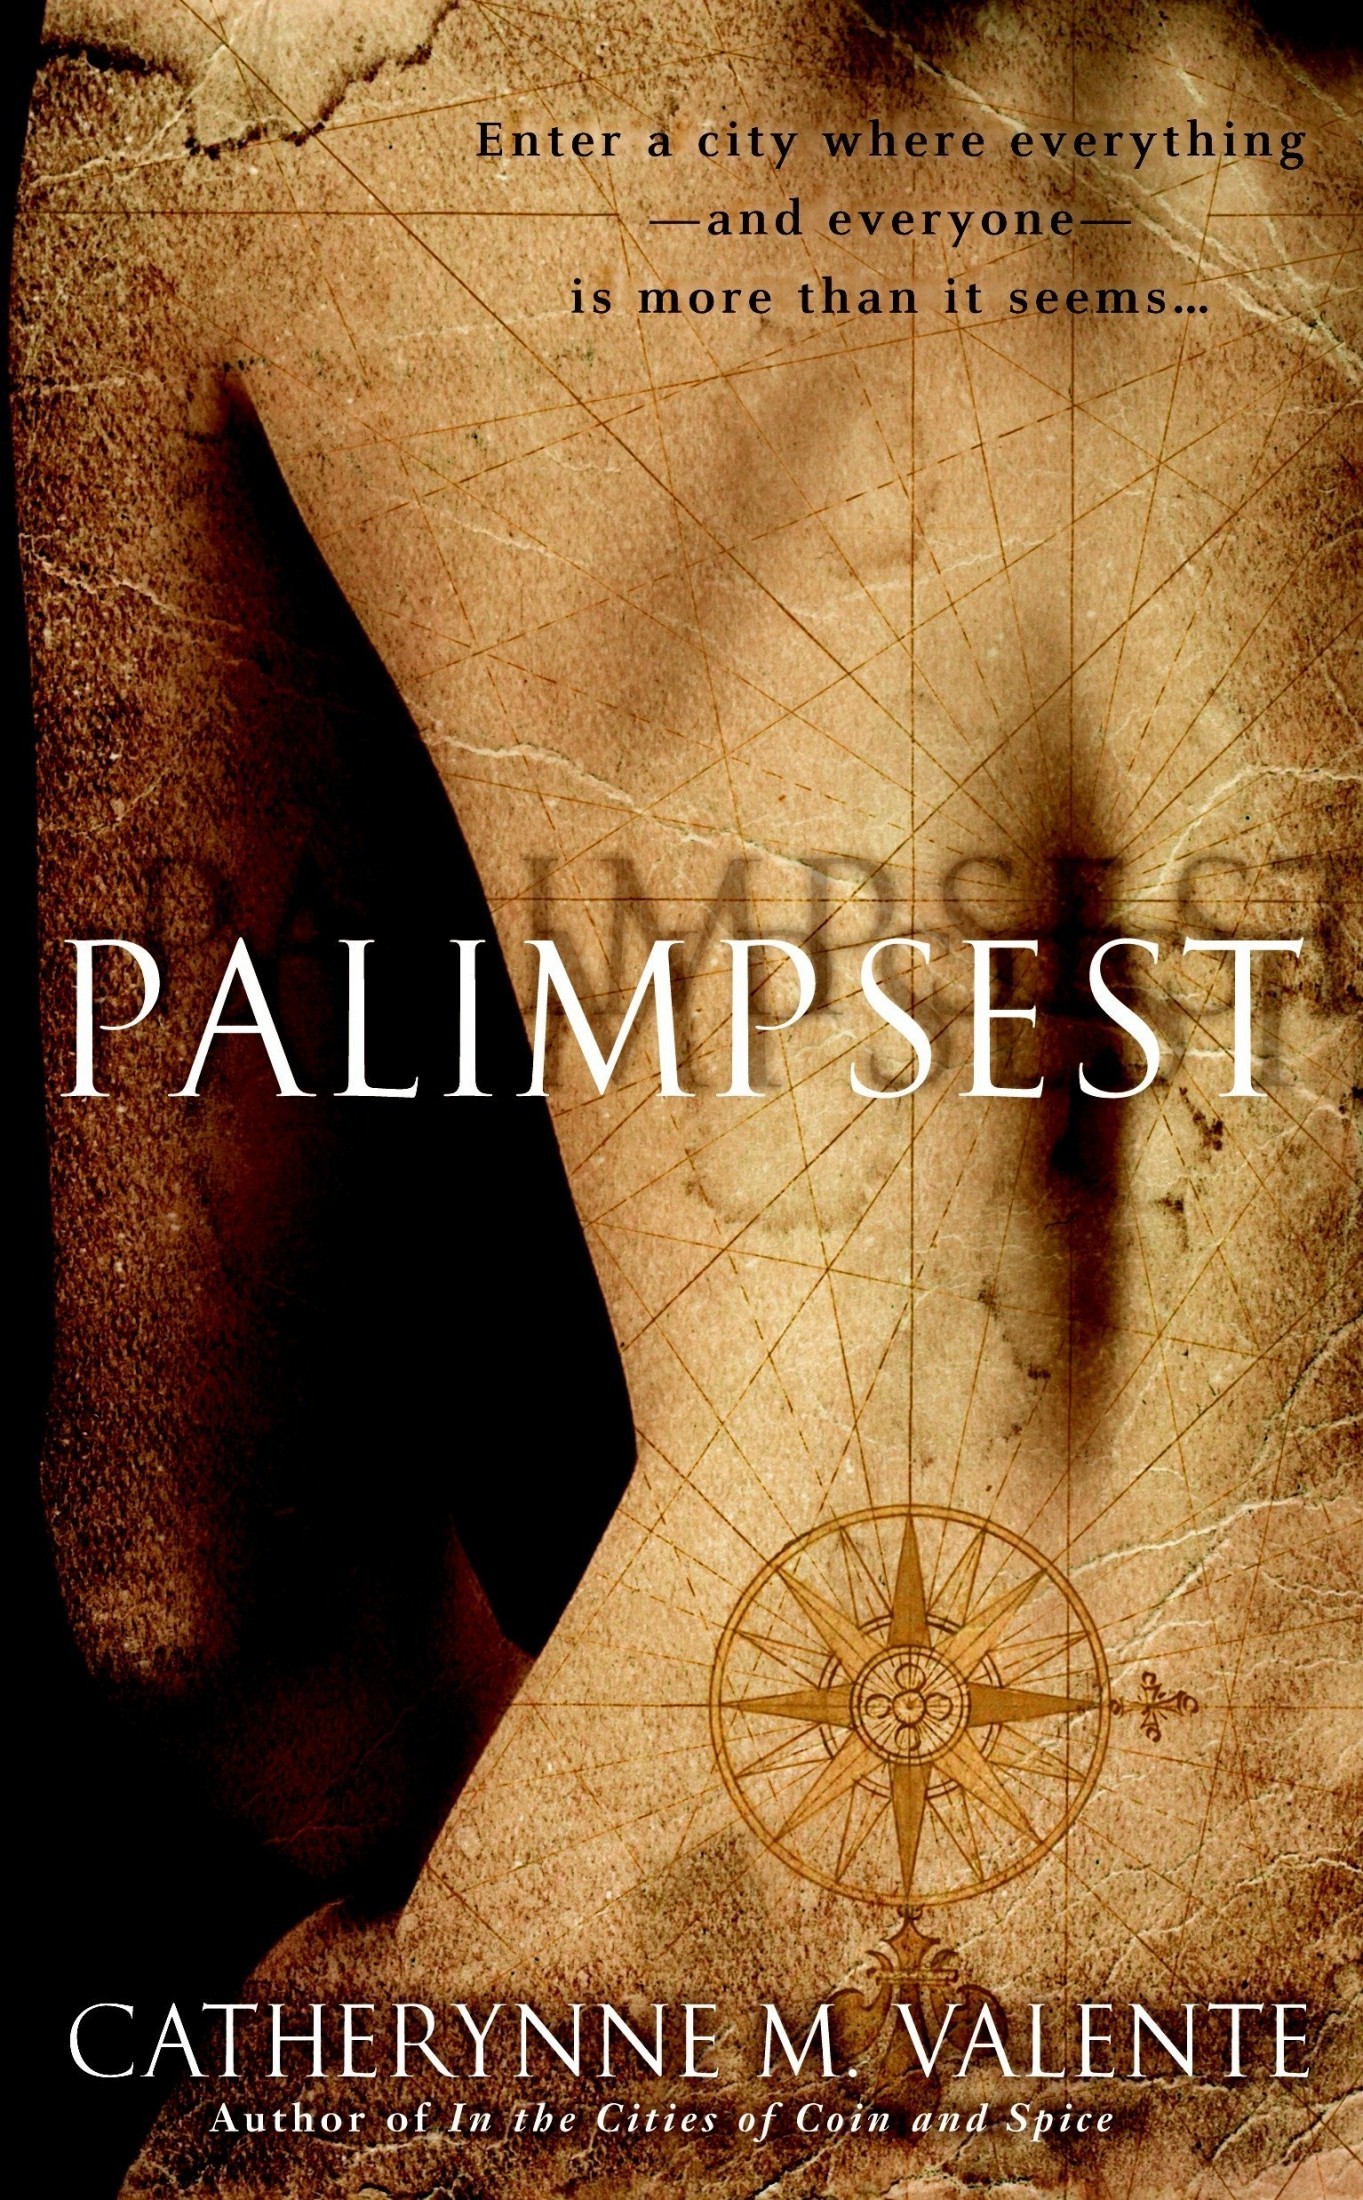 Catherynne M. Valente: Palimpsest (EBook, 2009, Spectra)